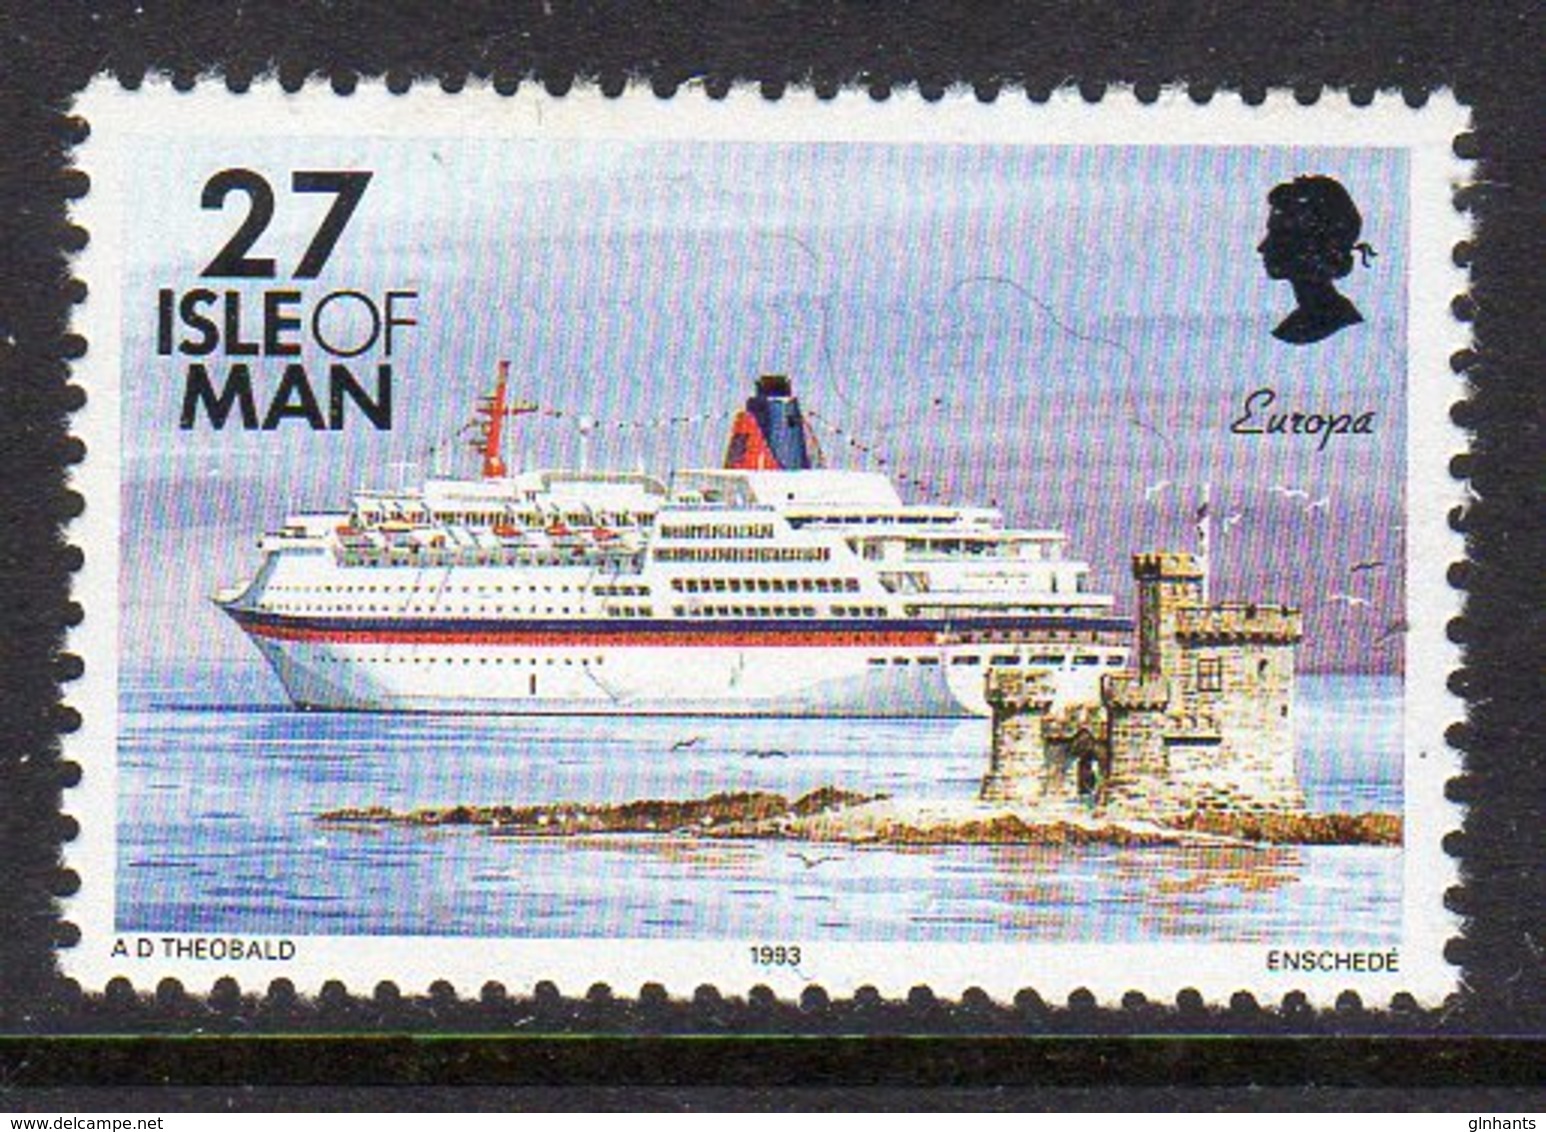 GB ISLE OF MAN IOM - 1993 DEFINITIVE SHIPS 27p STAMP FINE MNH ** SG 550 - Isle Of Man